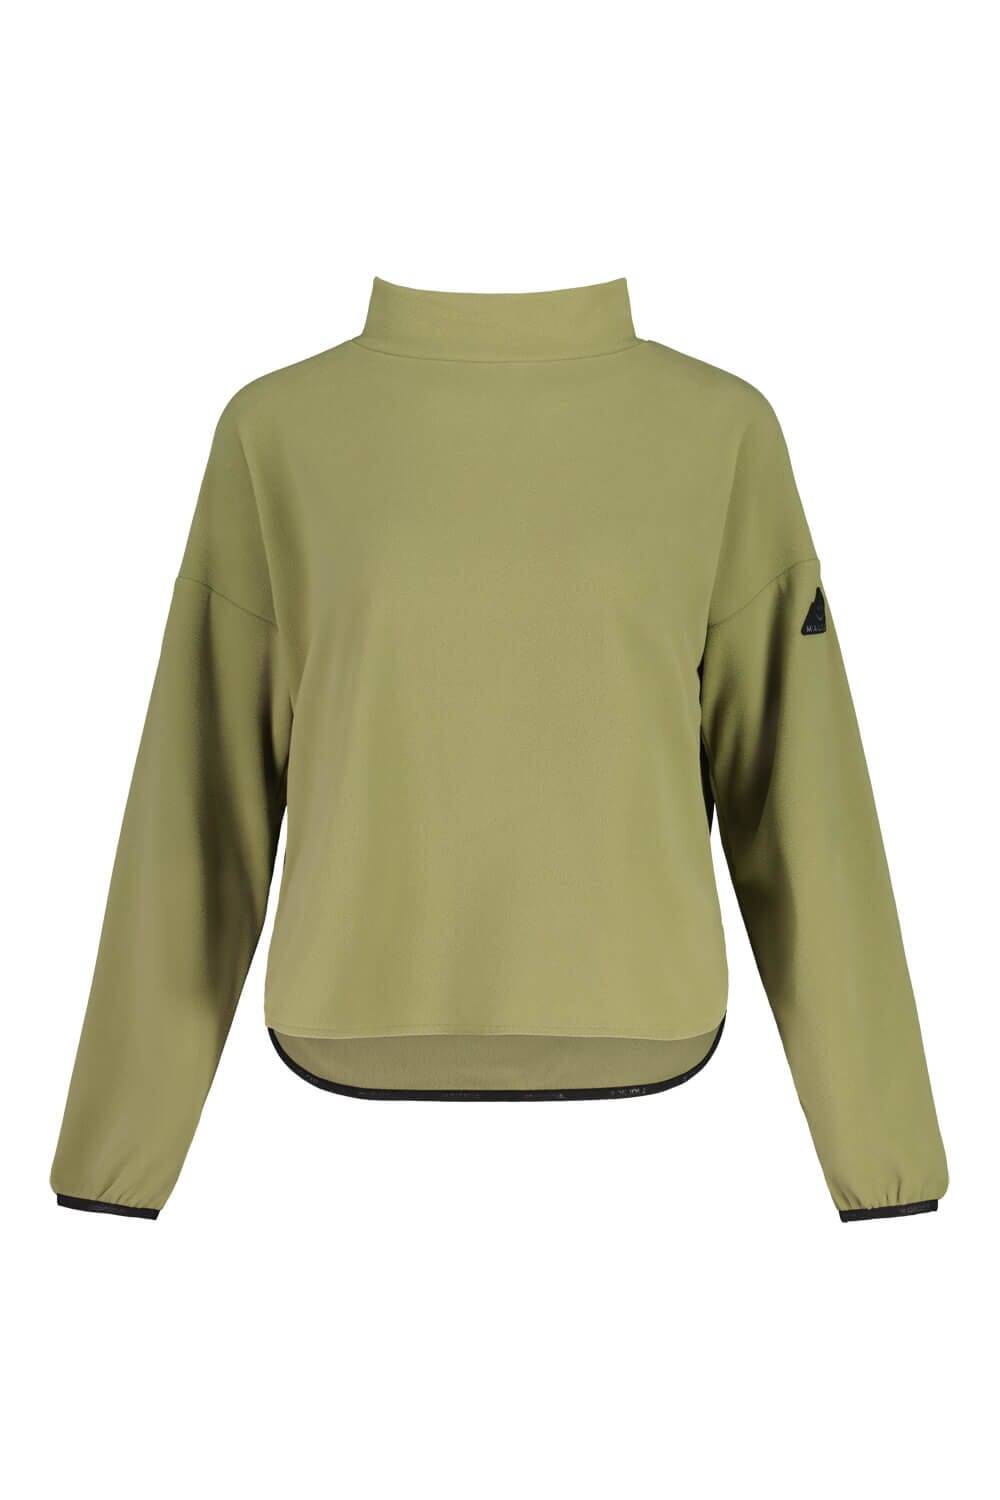 Maloja W's RomaliaM. Mountain Fleece Shirt - 100% Recycled Polyester Oak Shirt